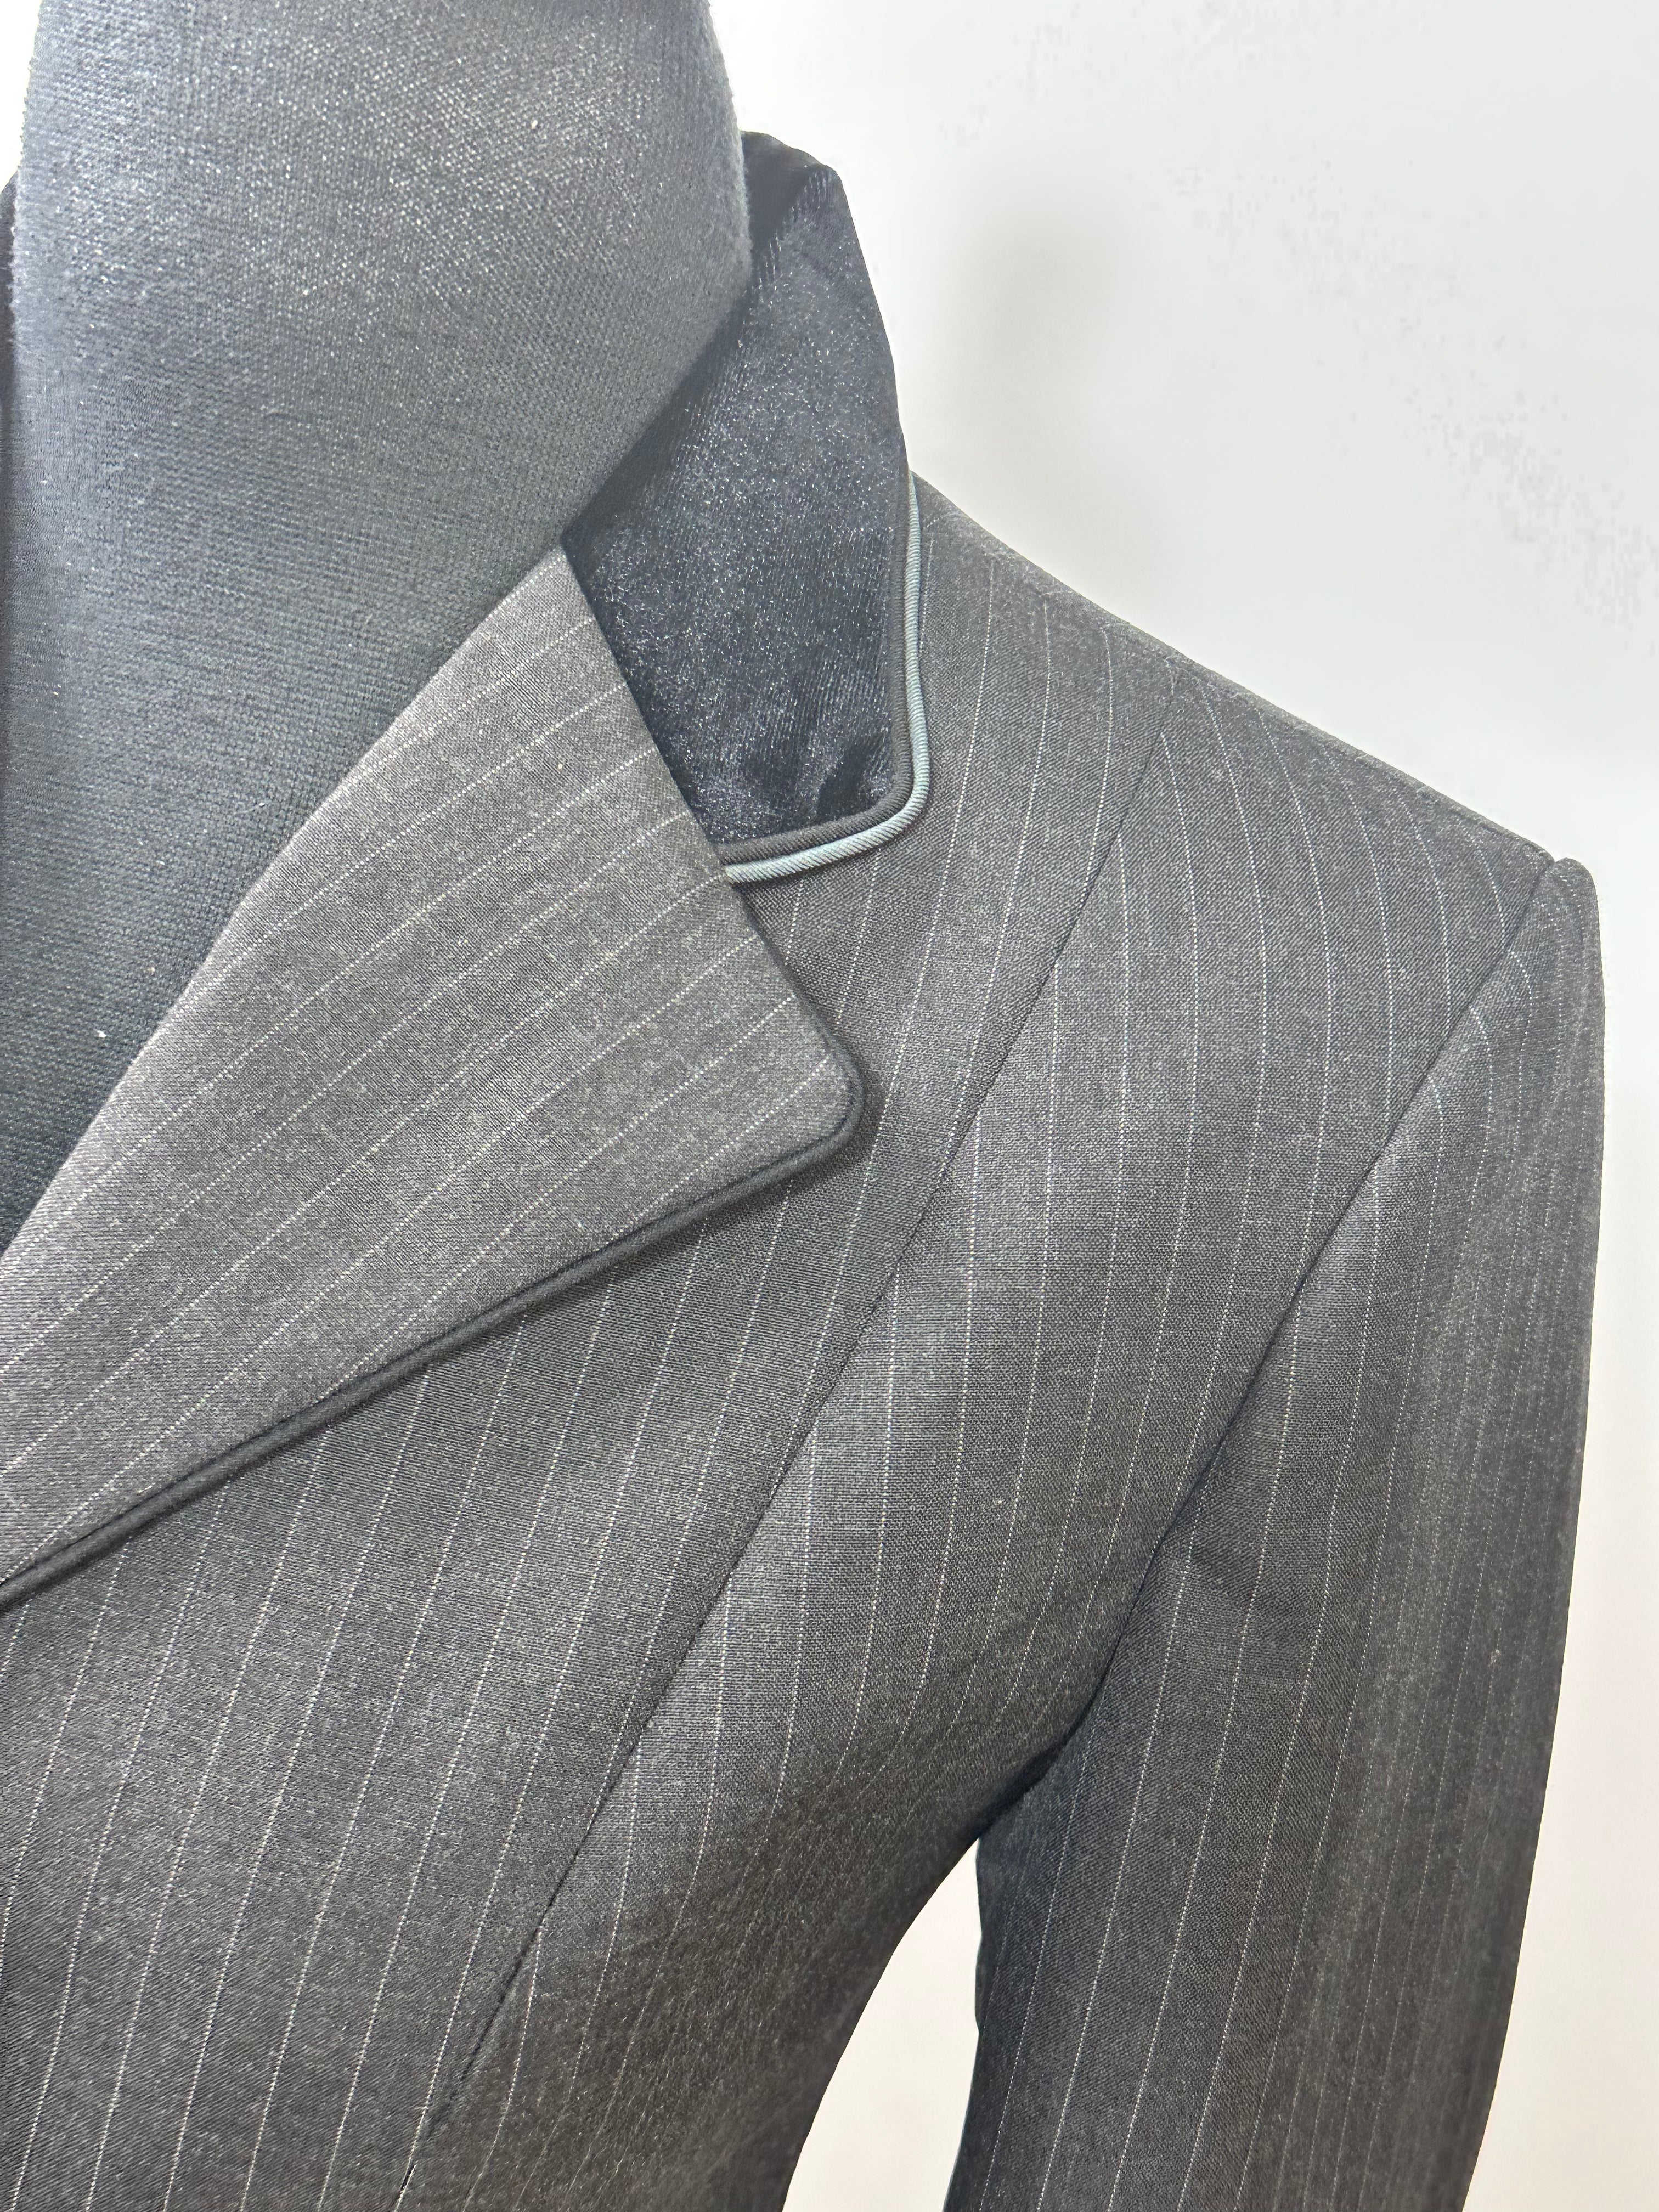 English Show Coat Charcoal Grey Stripe R119